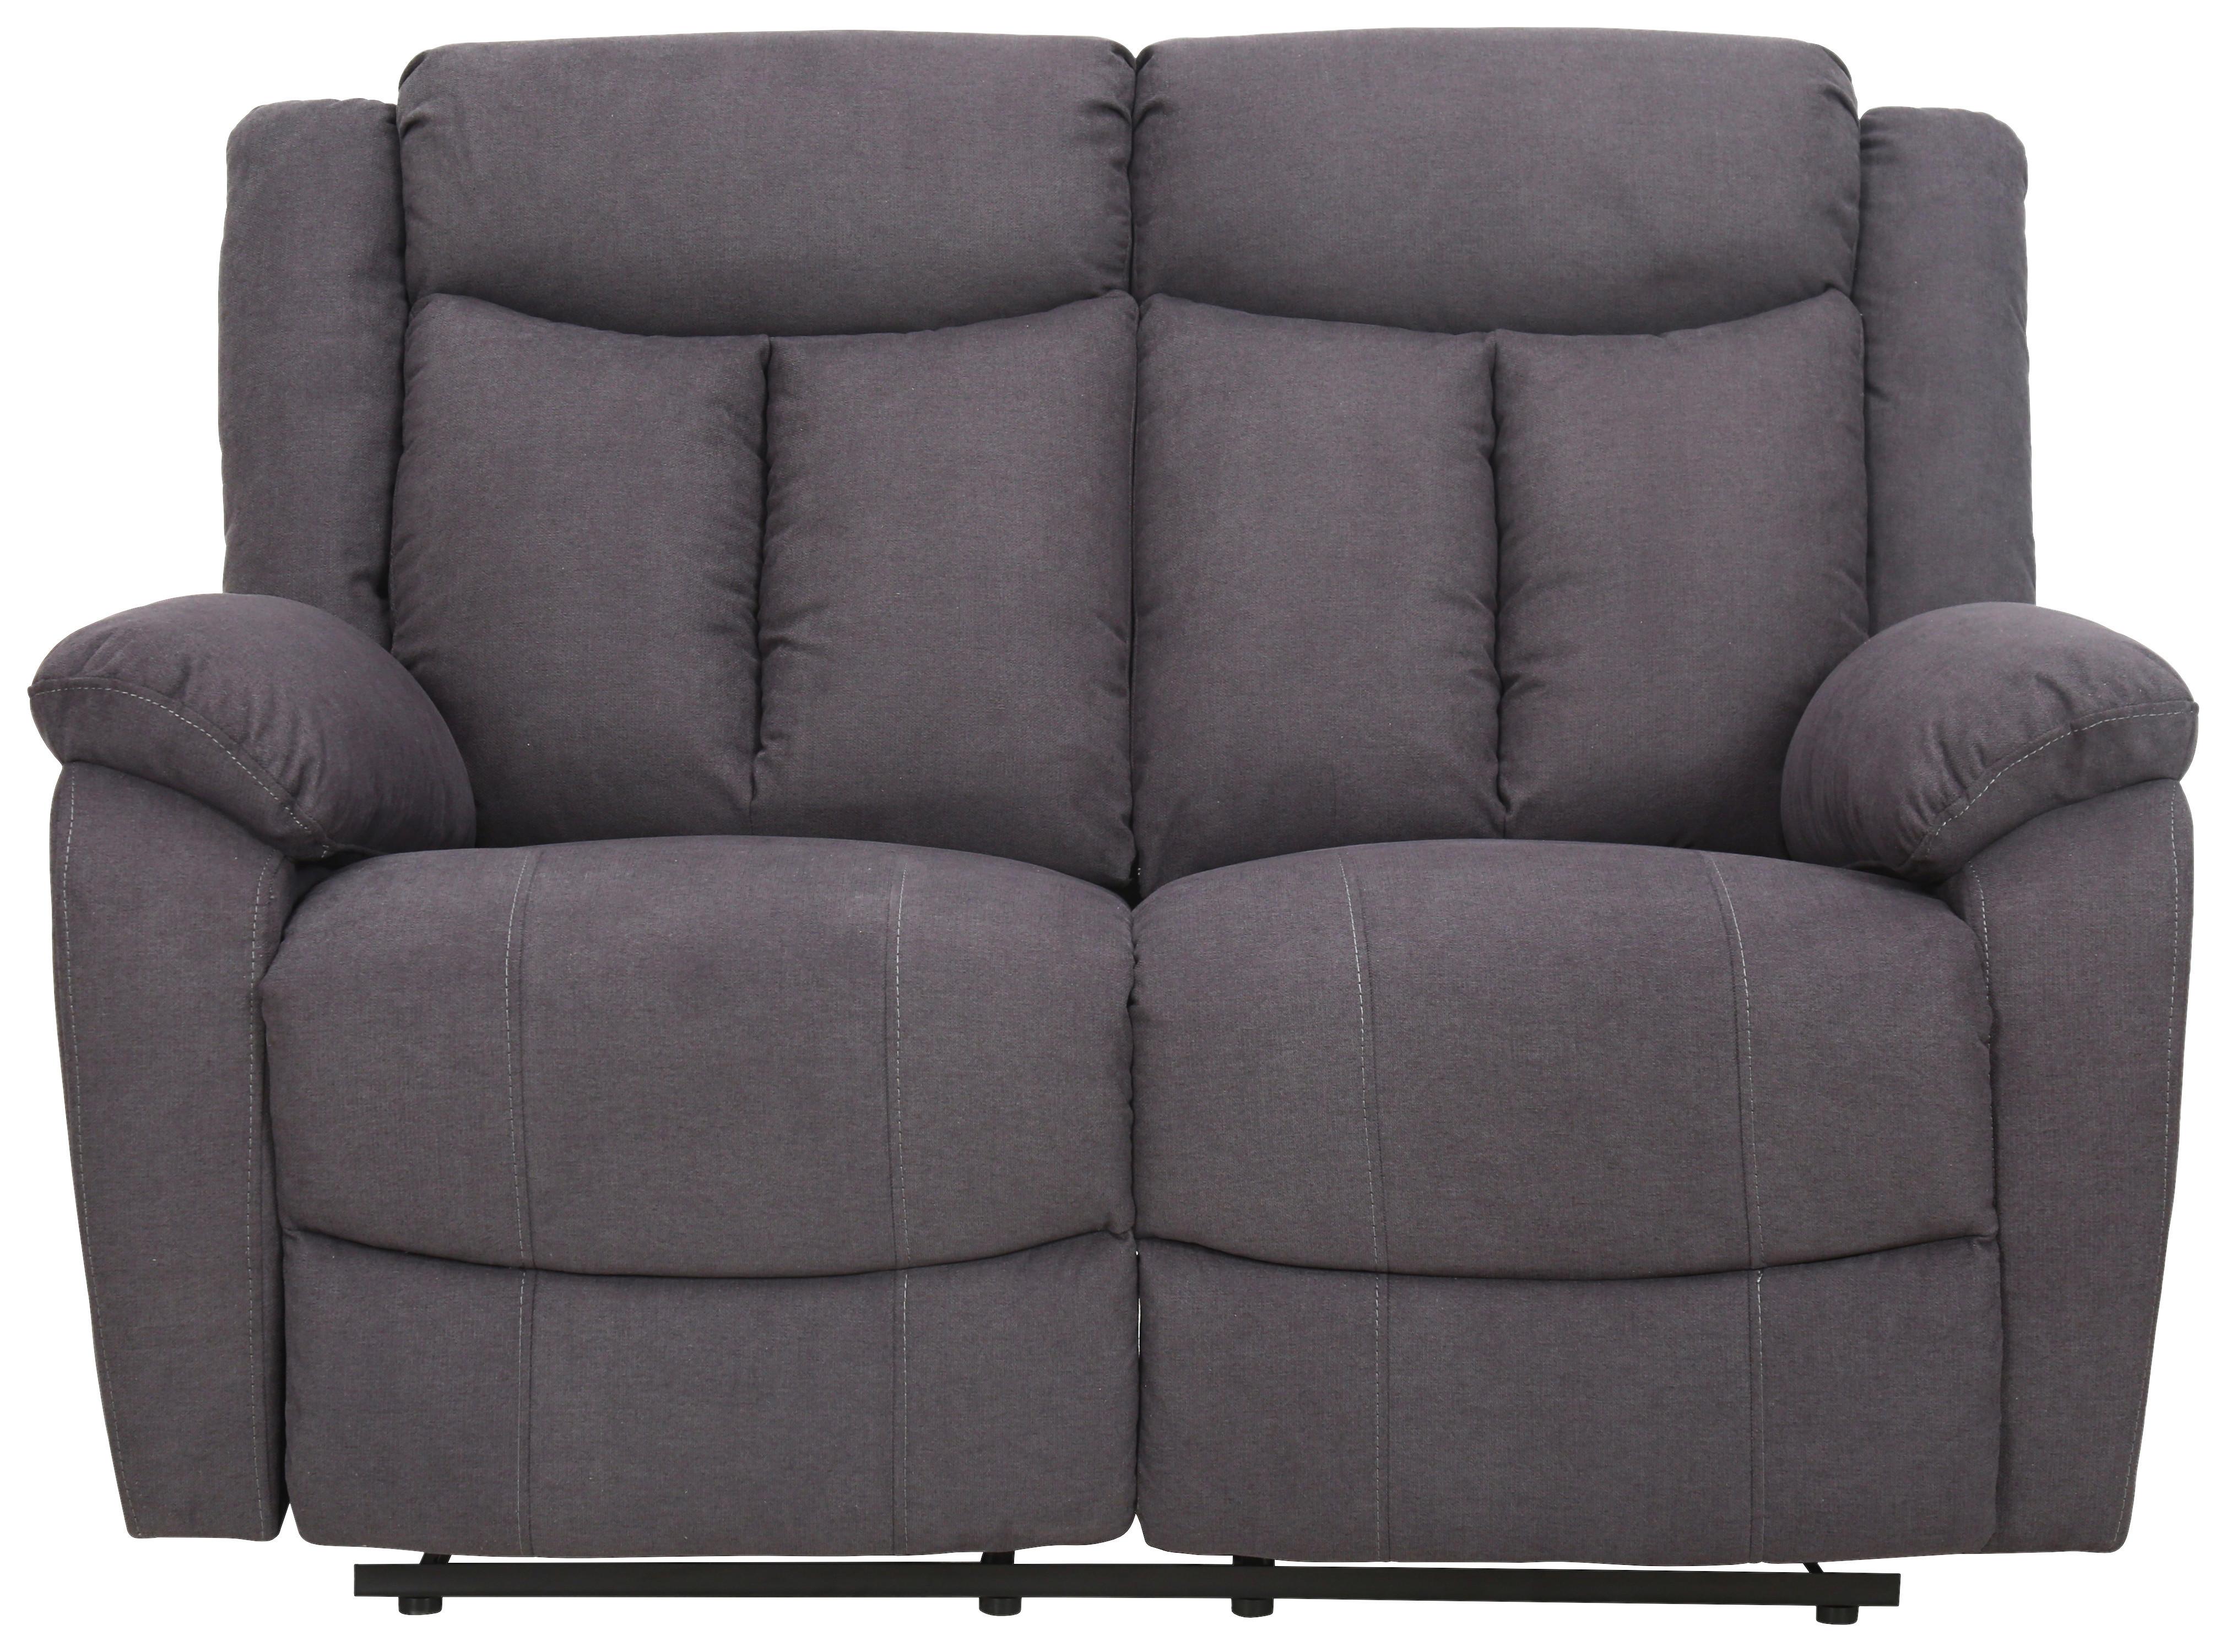 2-Sitzer-Sofa mit Relaxfunktion Oxford Grau - Schwarz/Grau, KONVENTIONELL, Holz/Textil (138/103/96cm) - Ondega